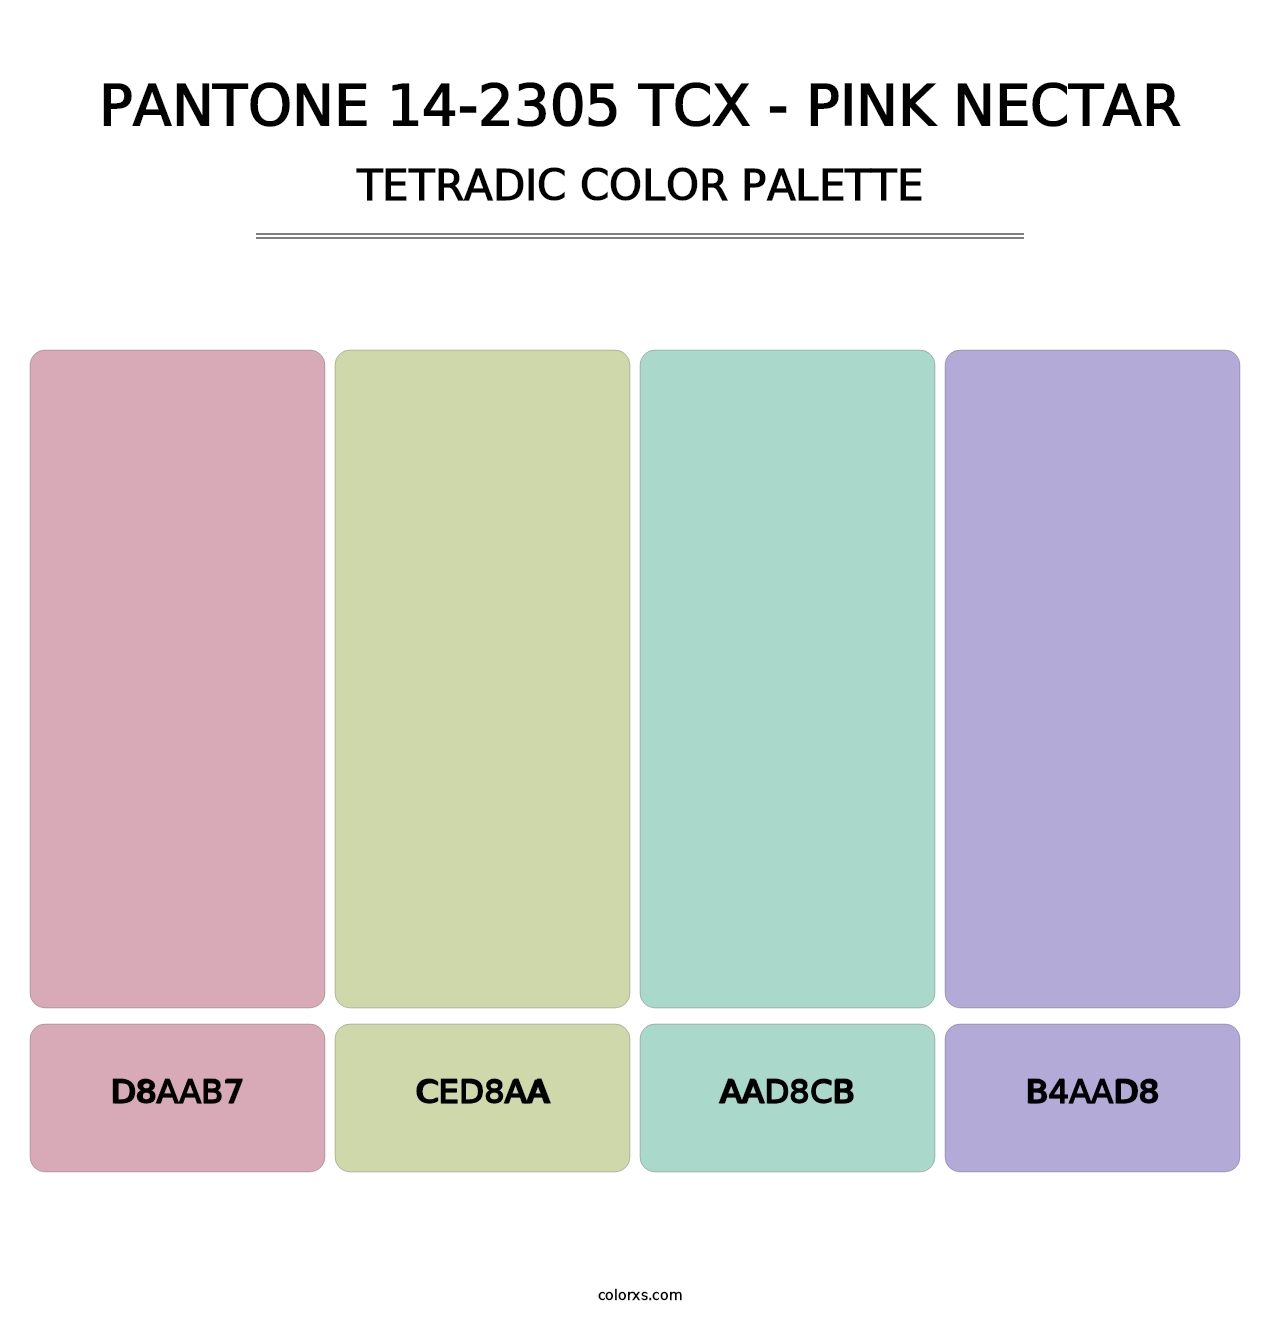 PANTONE 14-2305 TCX - Pink Nectar - Tetradic Color Palette